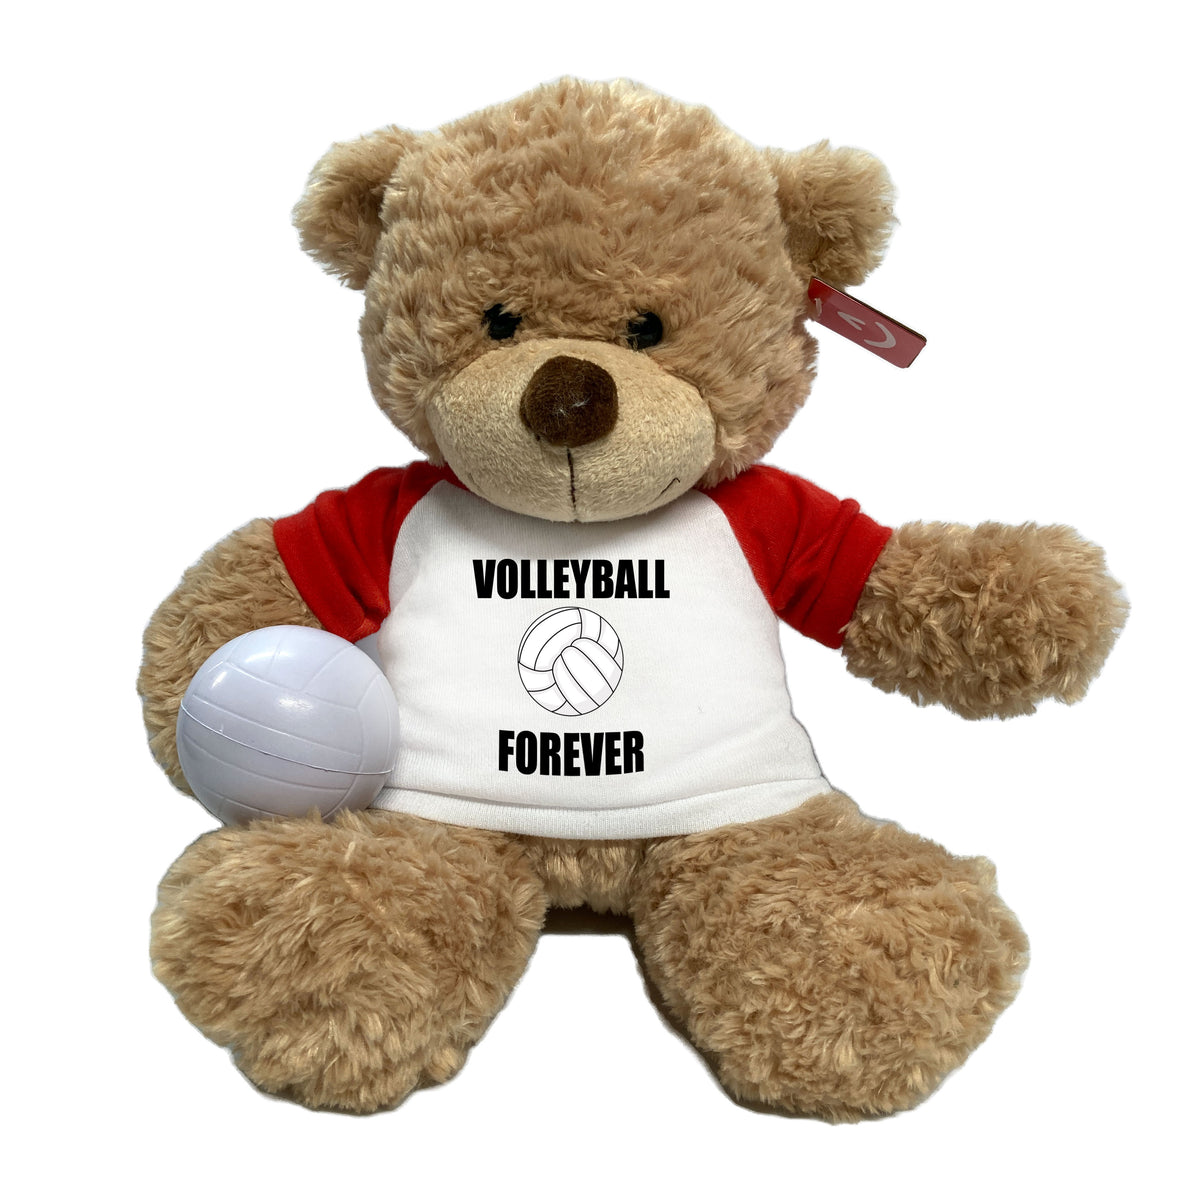 Volleyball Teddy Bear - Personalized 13" Bonny Bear